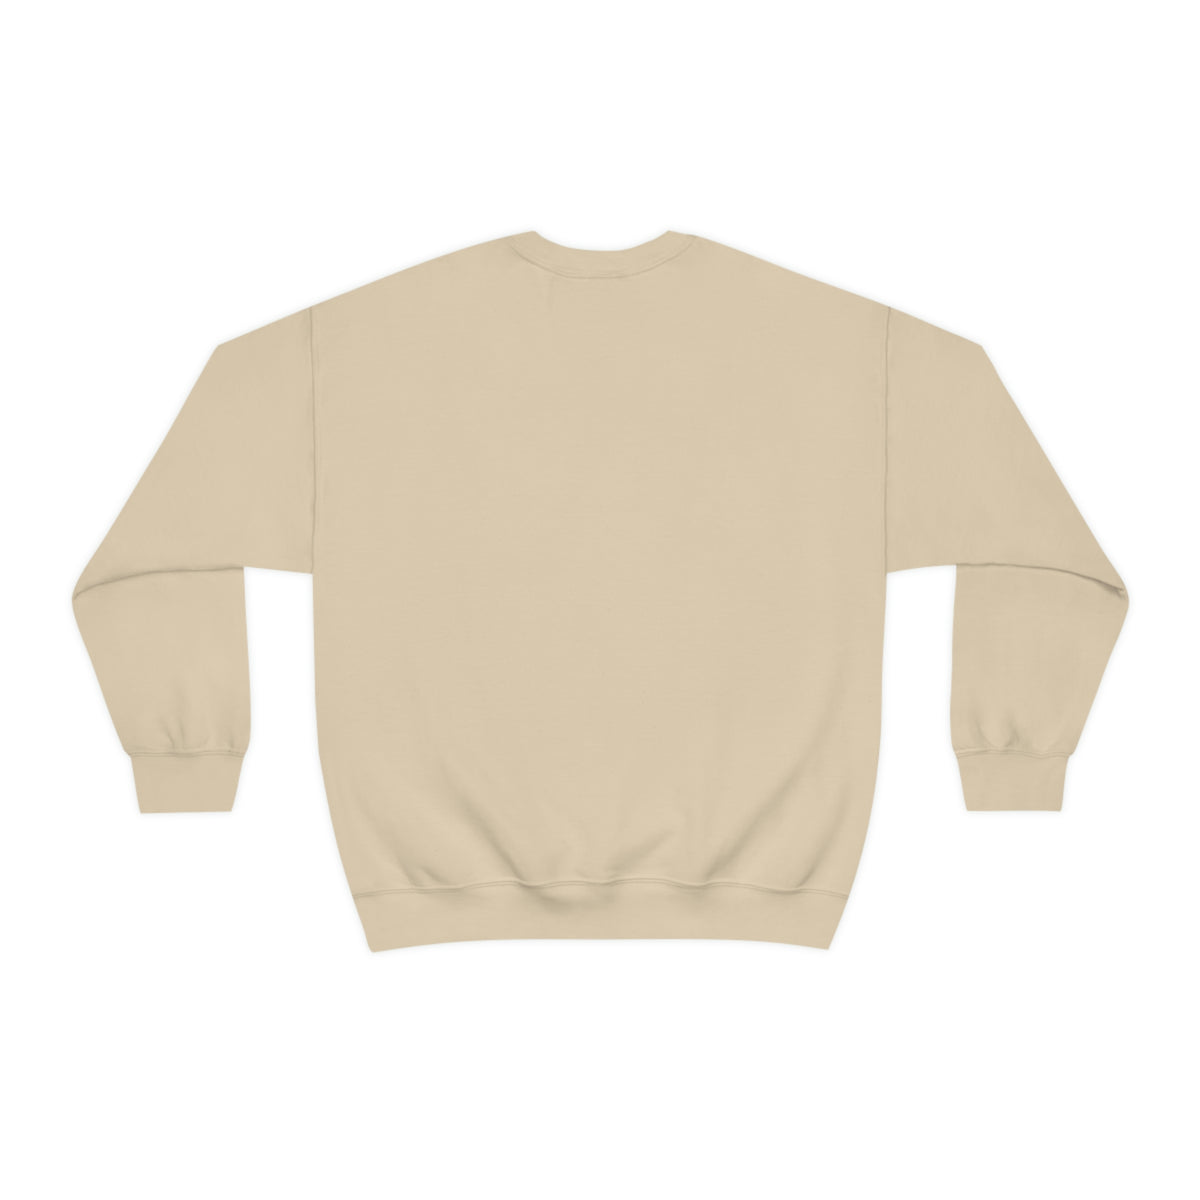 Capybara and Bird - Unisex Sweatshirt